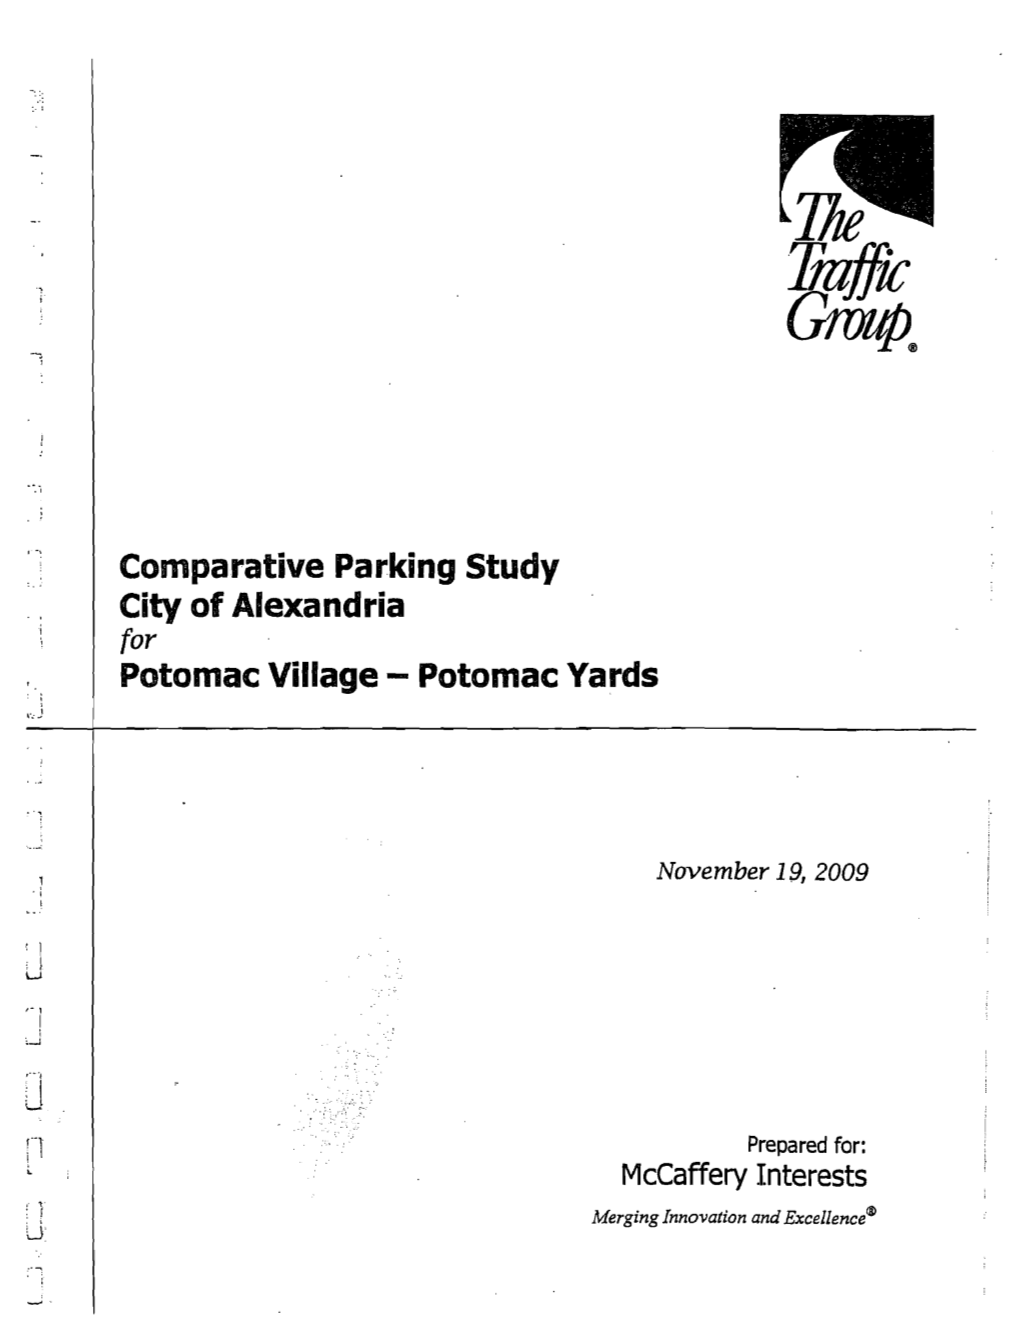 Comparative Parking Study City of Alexandria Potornac Village